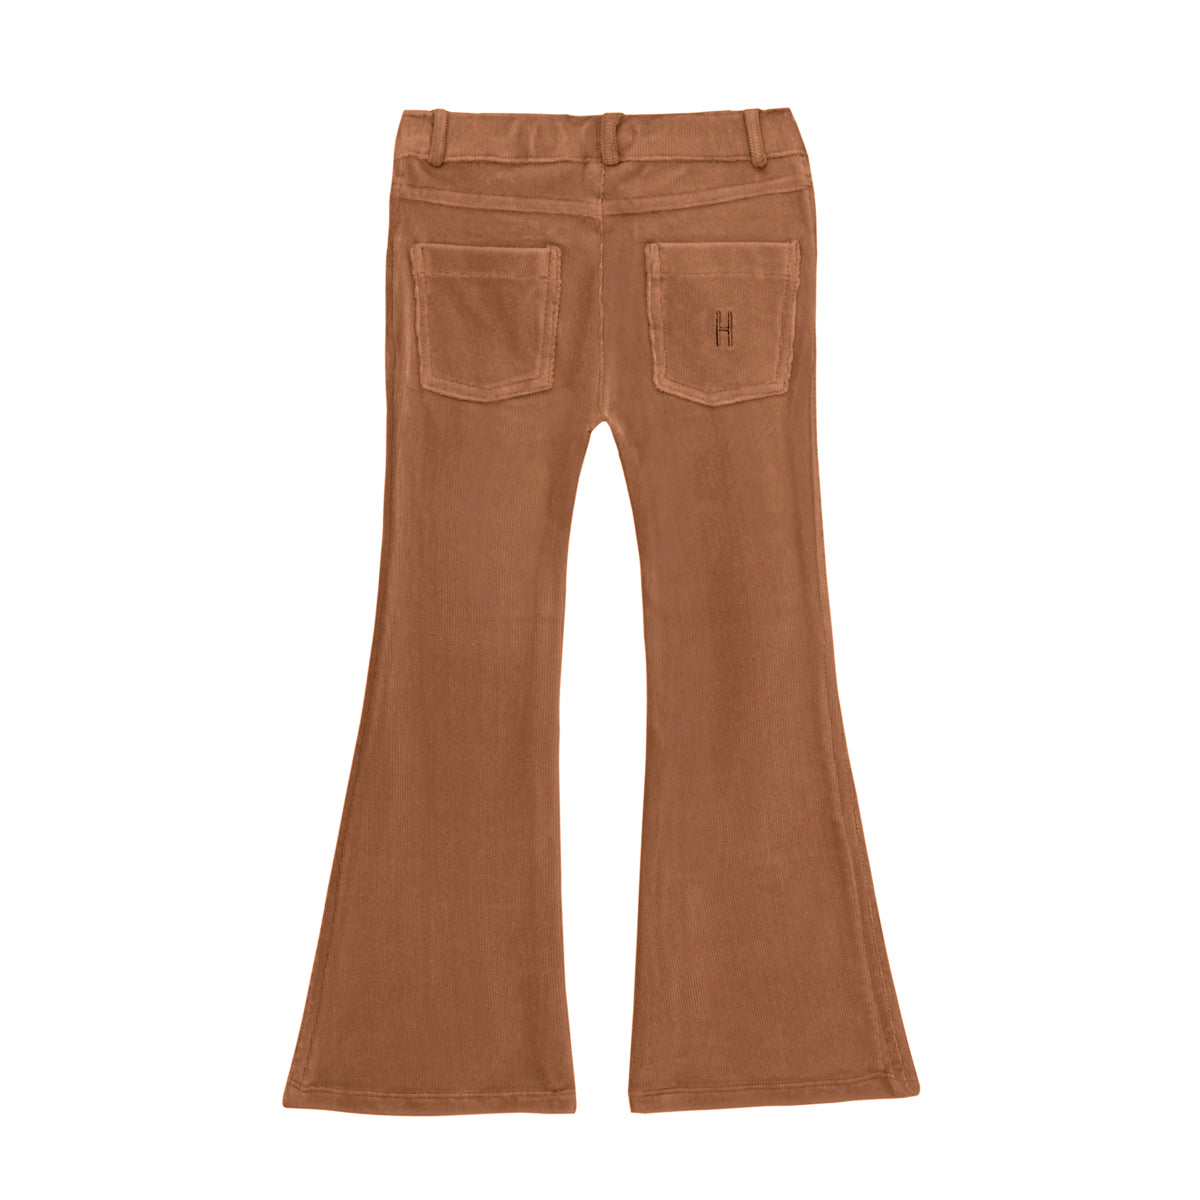 LITTLE HEDONIST - Pantalon neuf en velours côtelé marron